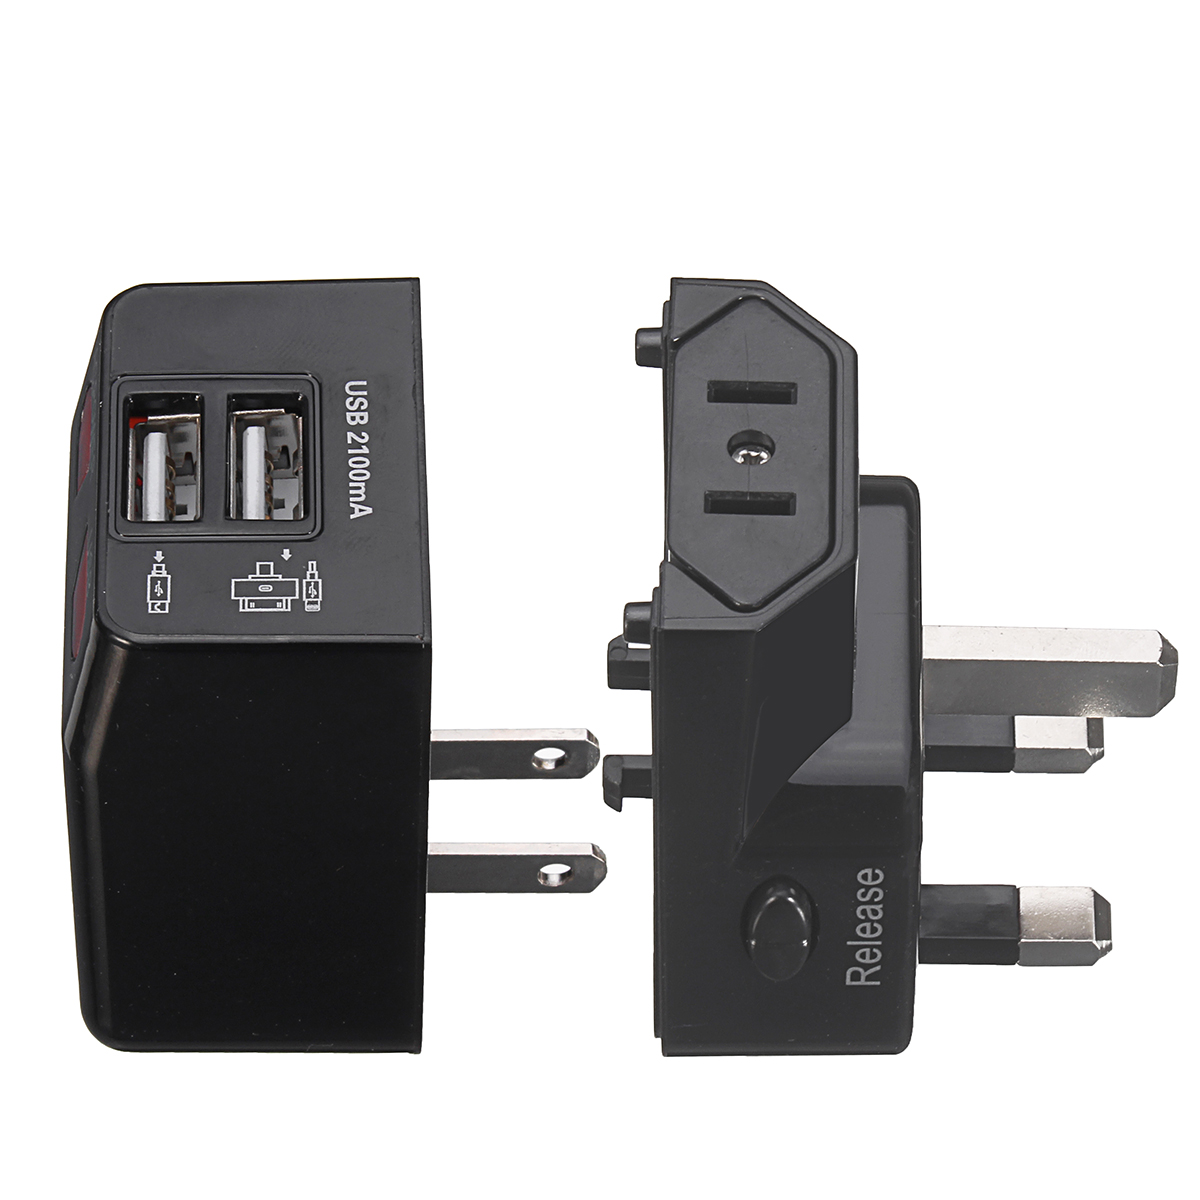 125-250V-USUKAUEU-Universal-World-Travel-Adapter-Plug-Dual-USB-Port-w-Surge-Protector-1286824-6